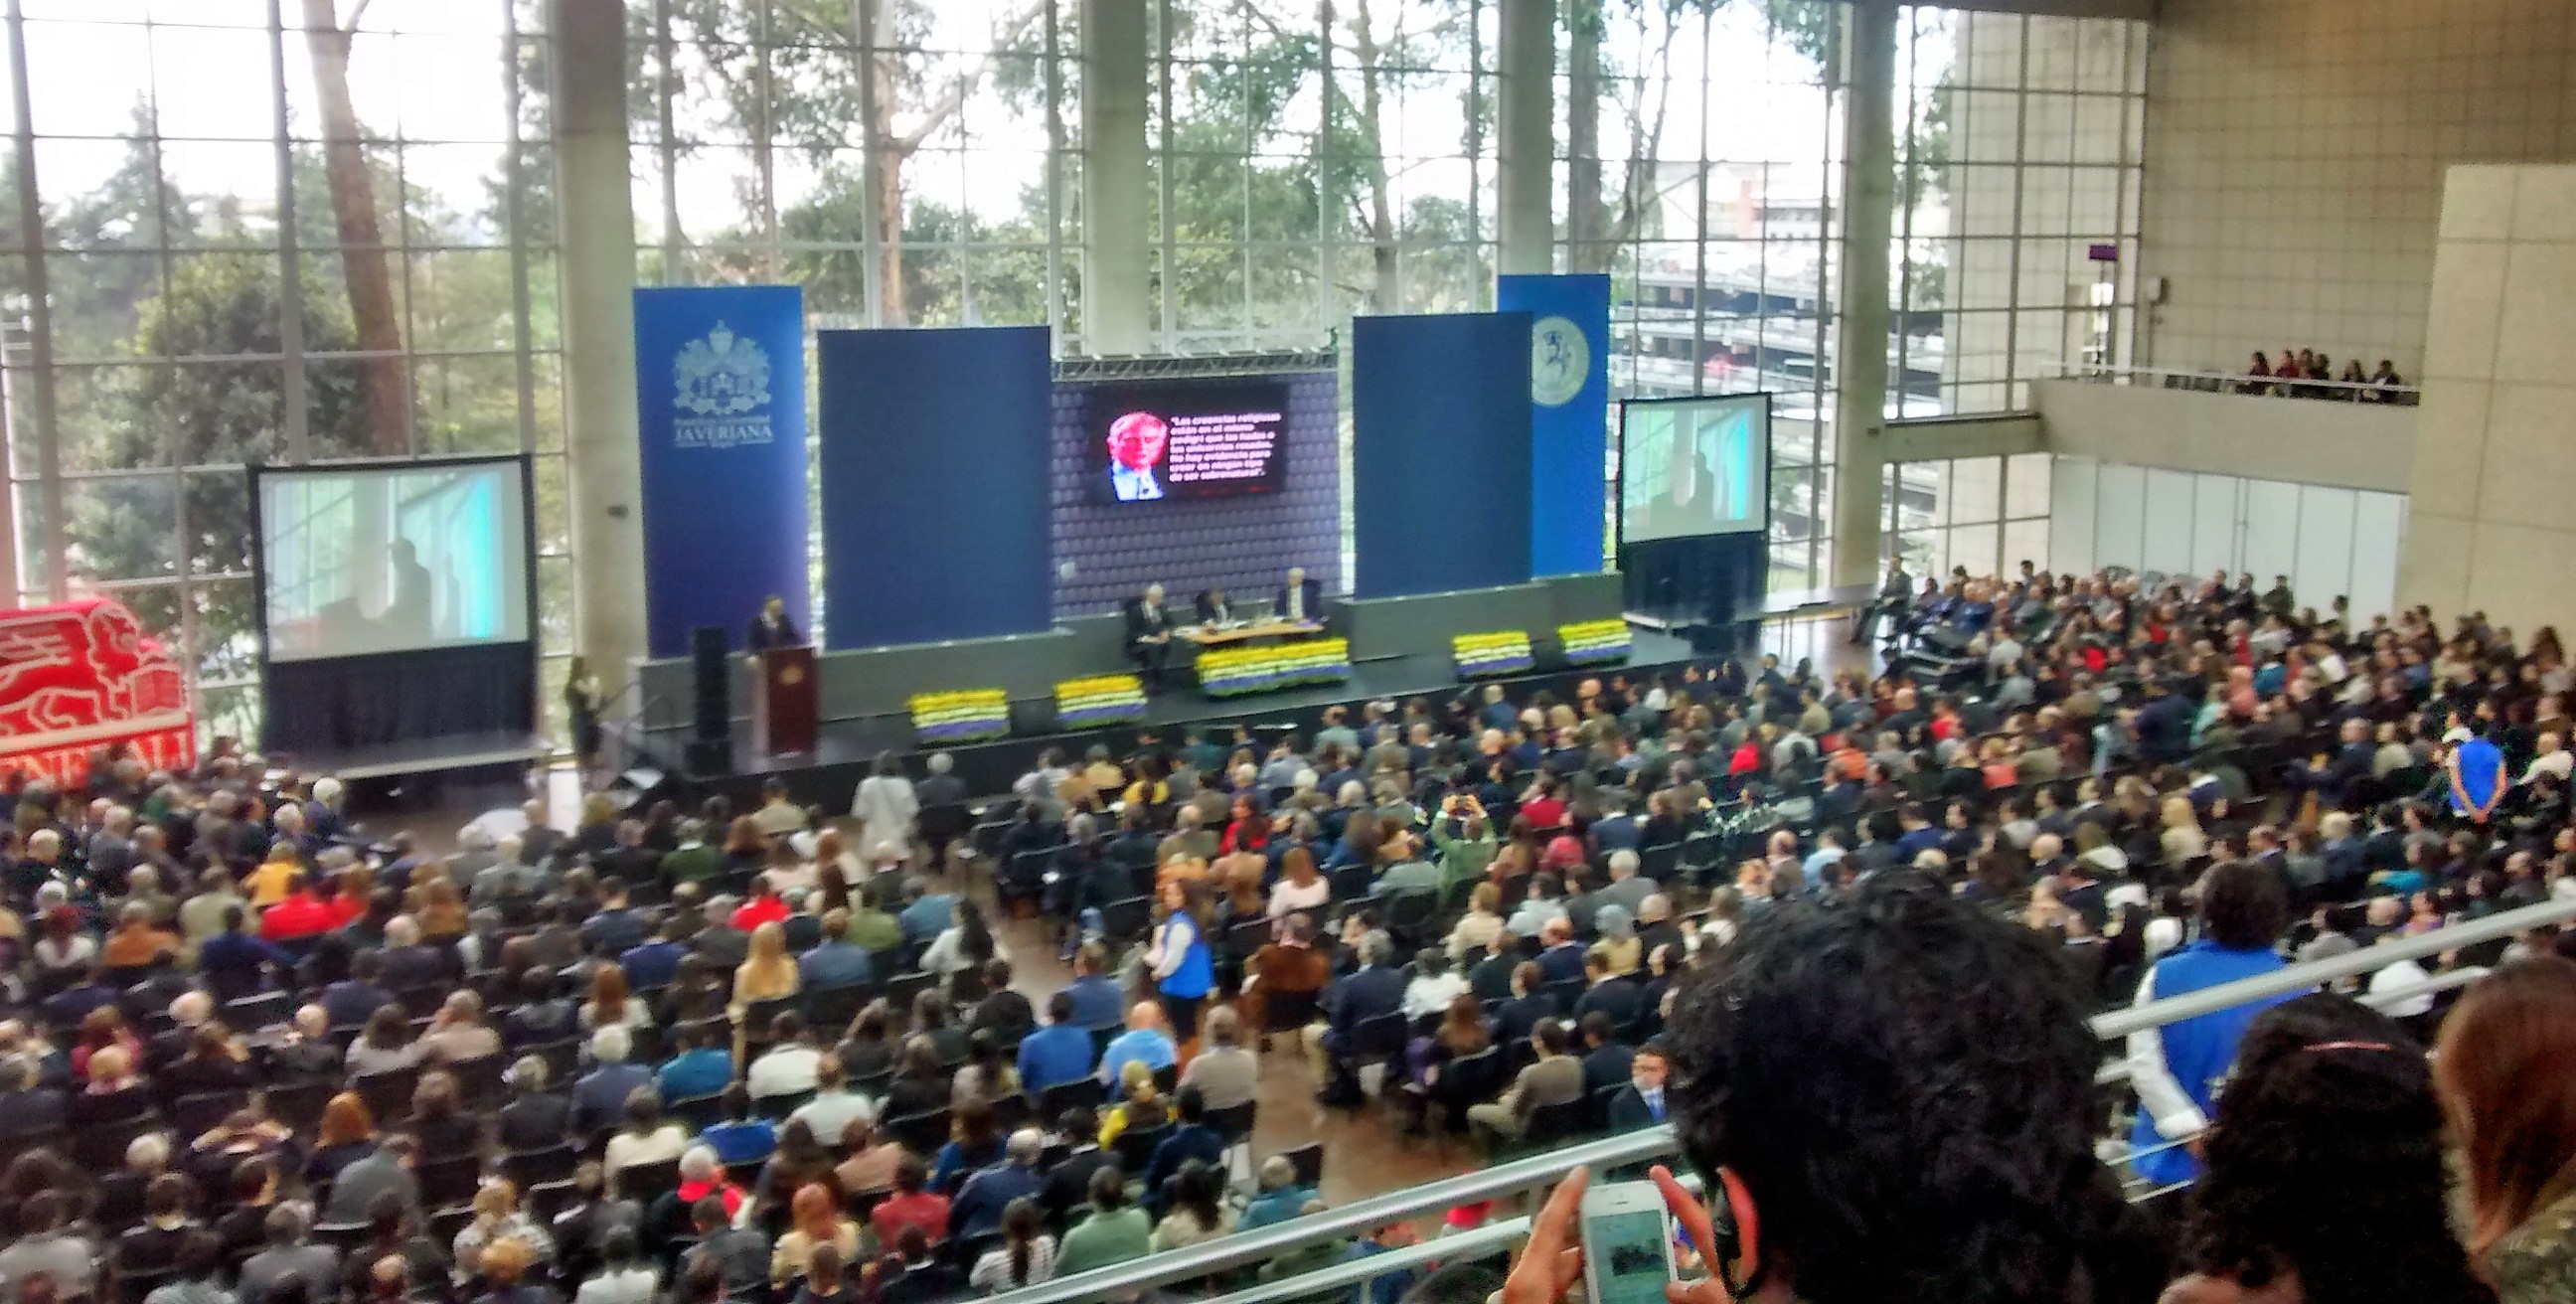 Richard Dawkins in Bogotá, Colombia